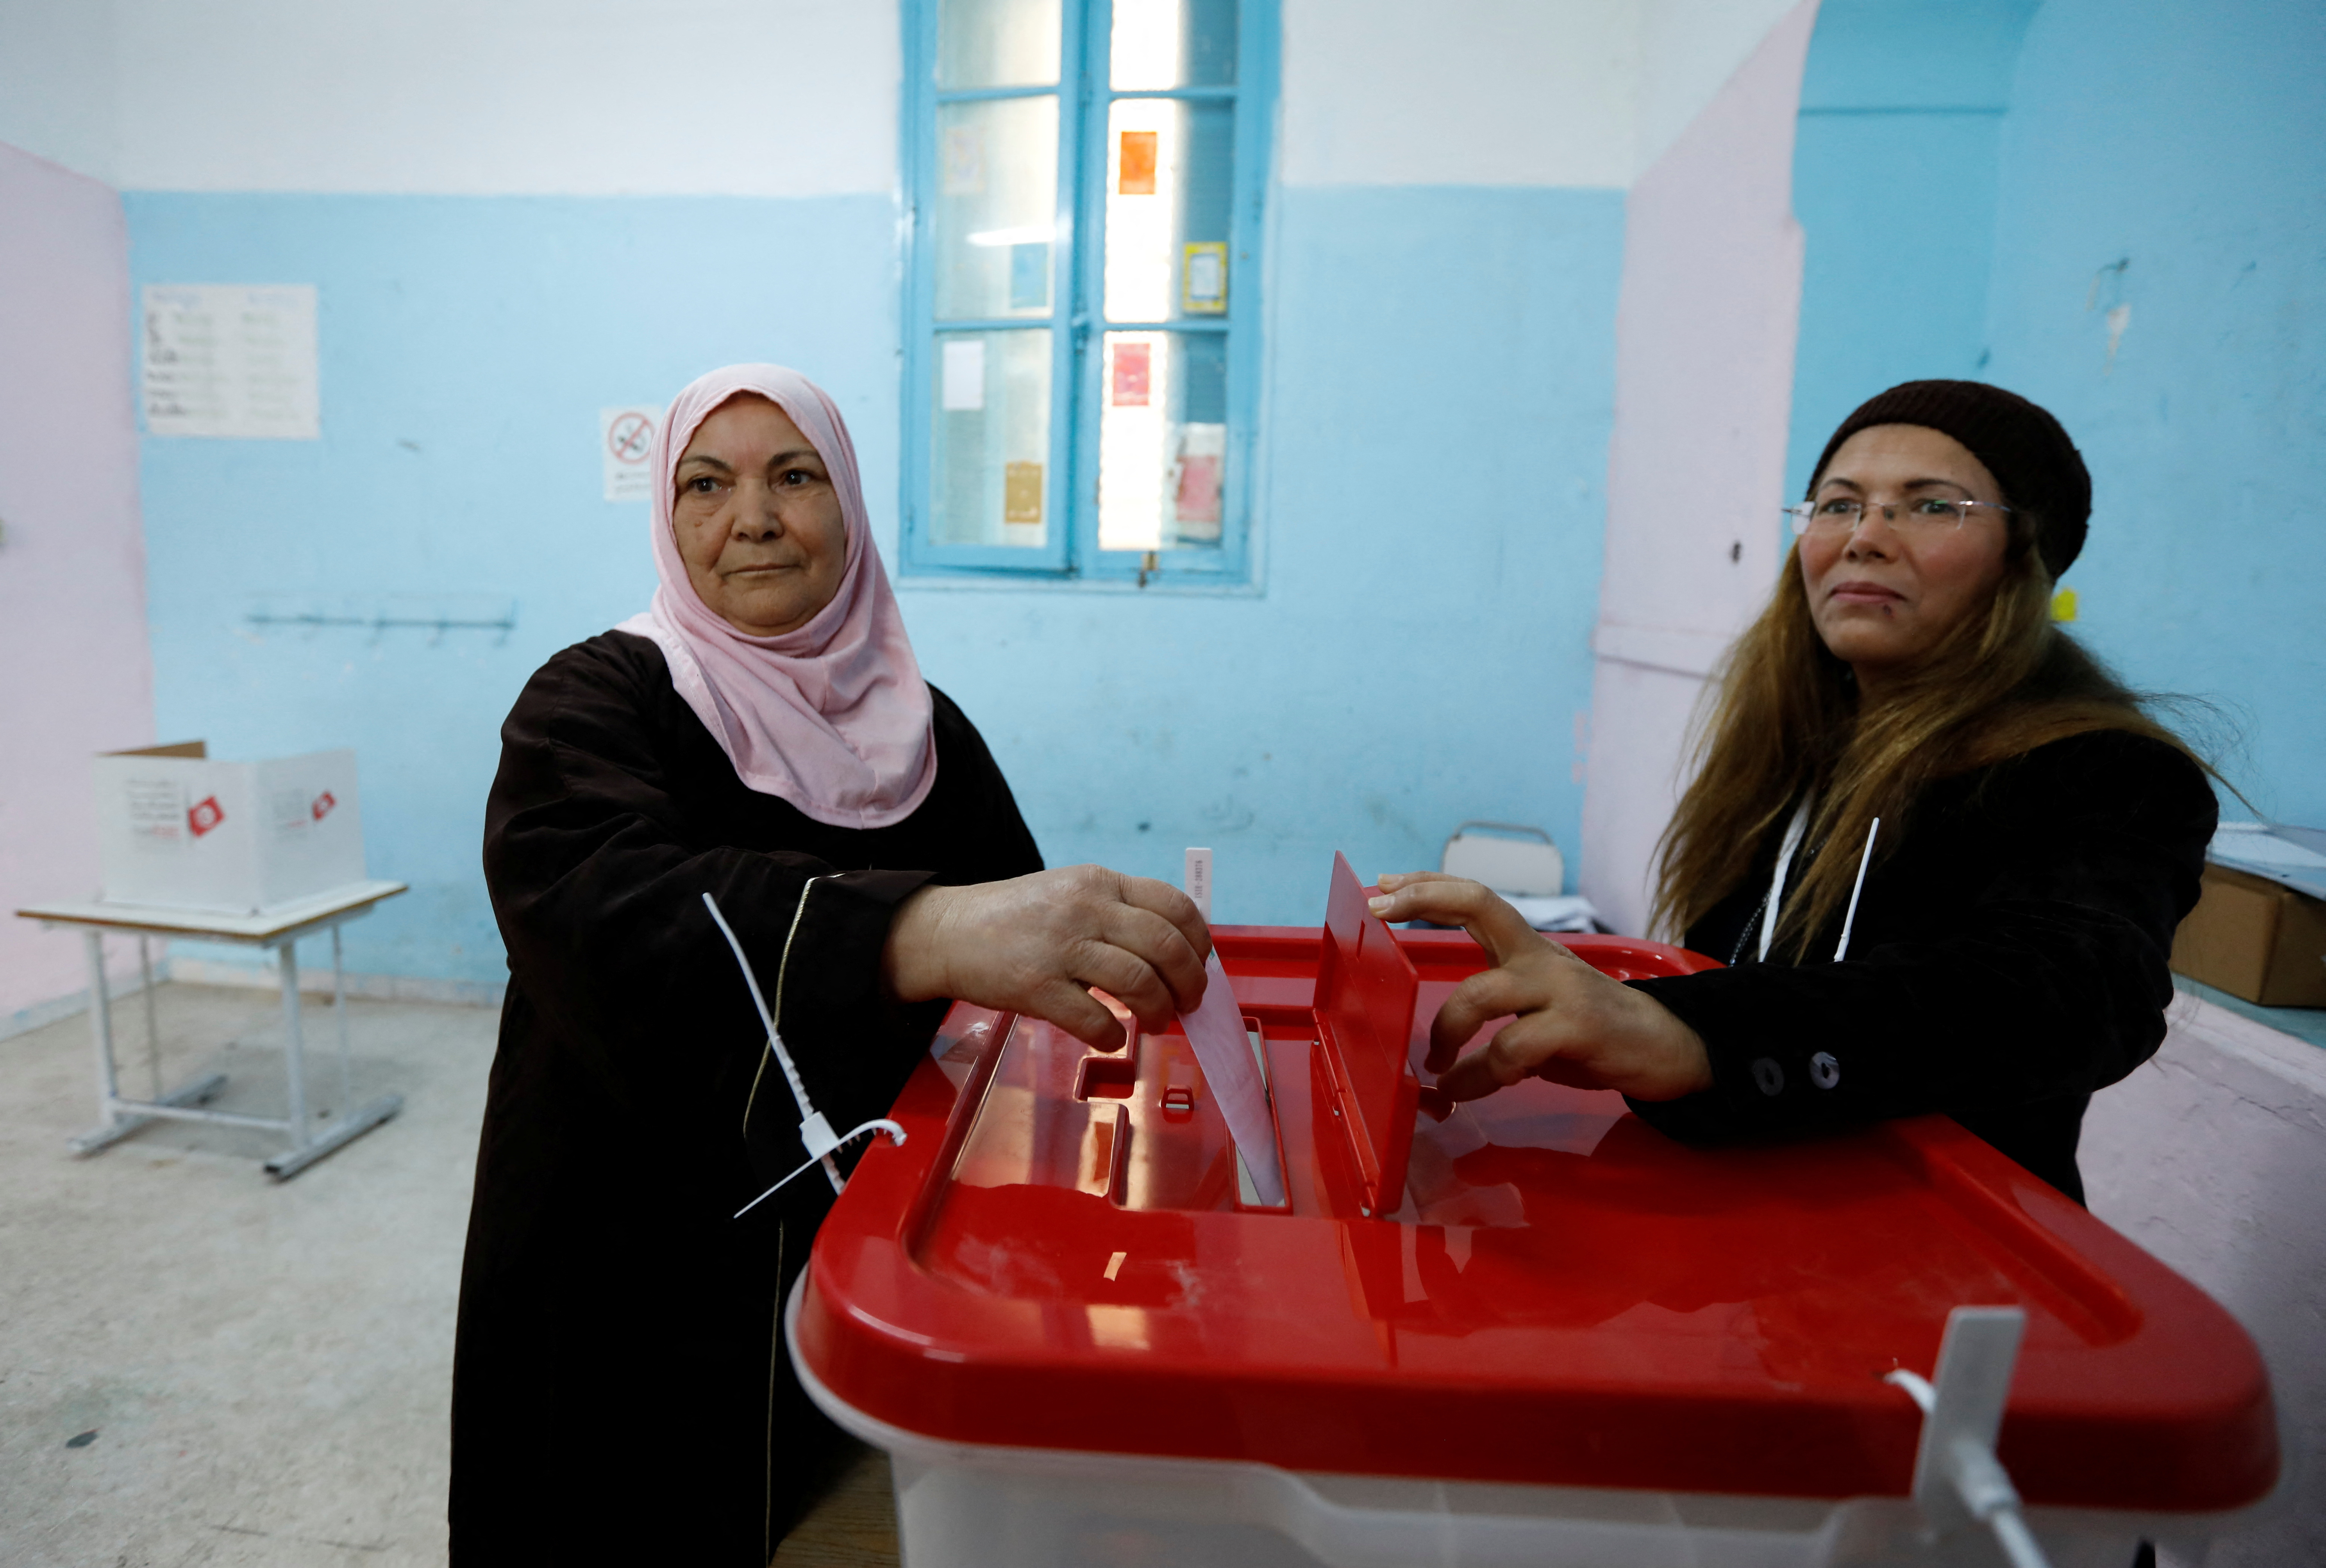 Parliamentary election in Tunisia